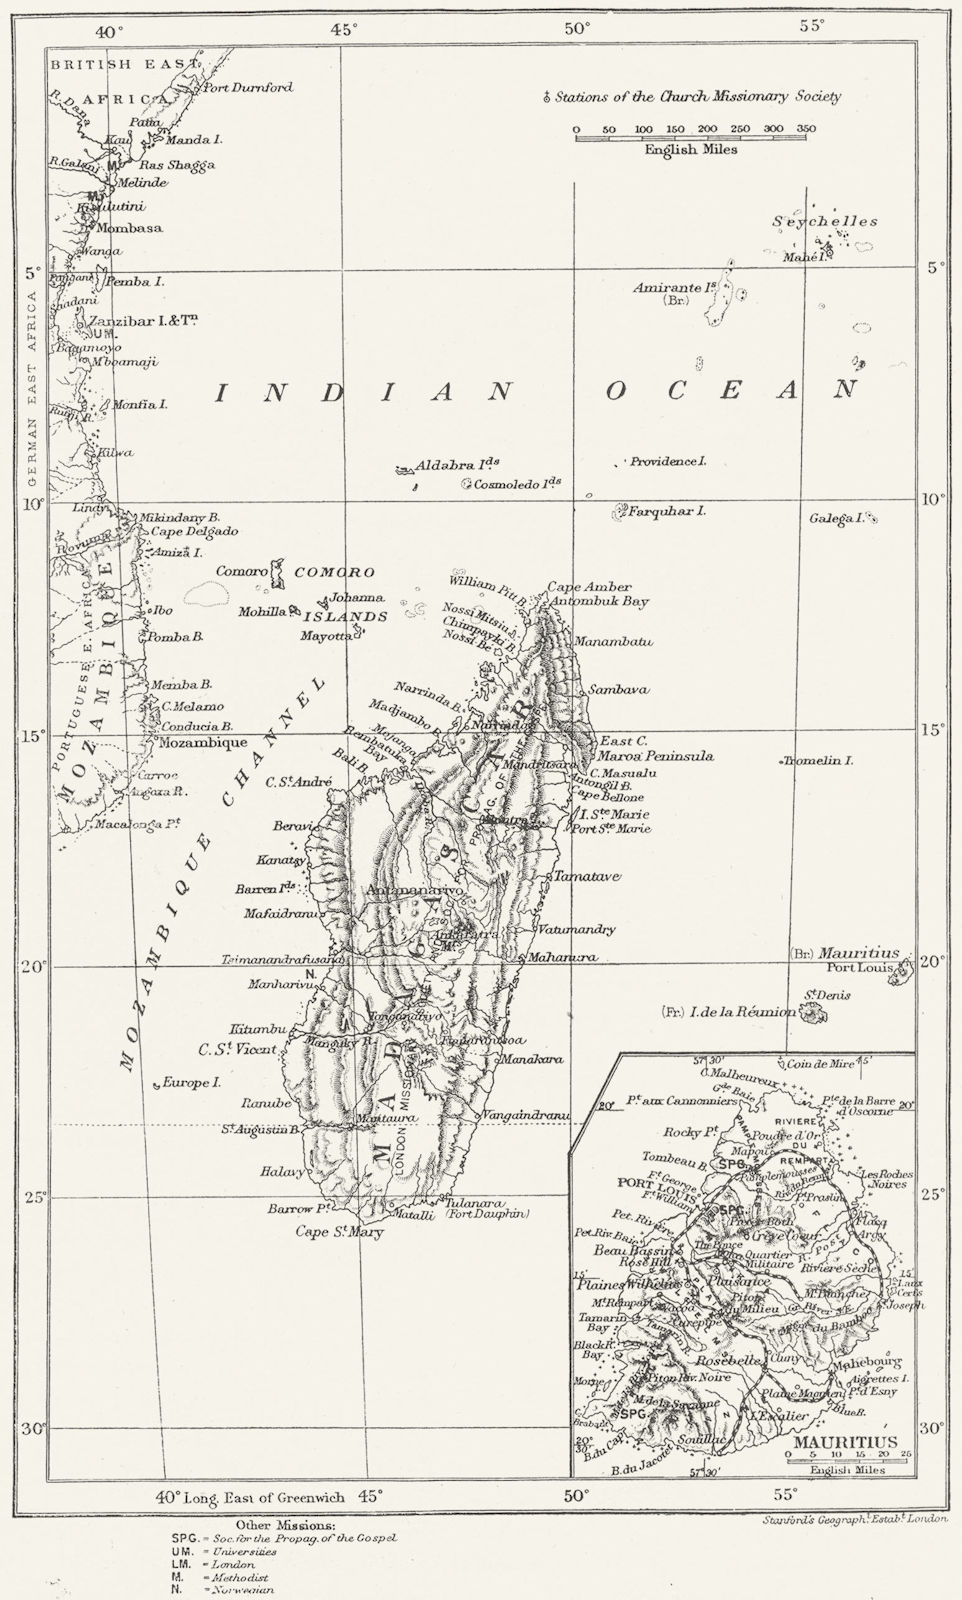 Associate Product EAST AFRICA CHRISTIAN MISSIONS. Mauritius Madagascar Tanzania Church 1897 map